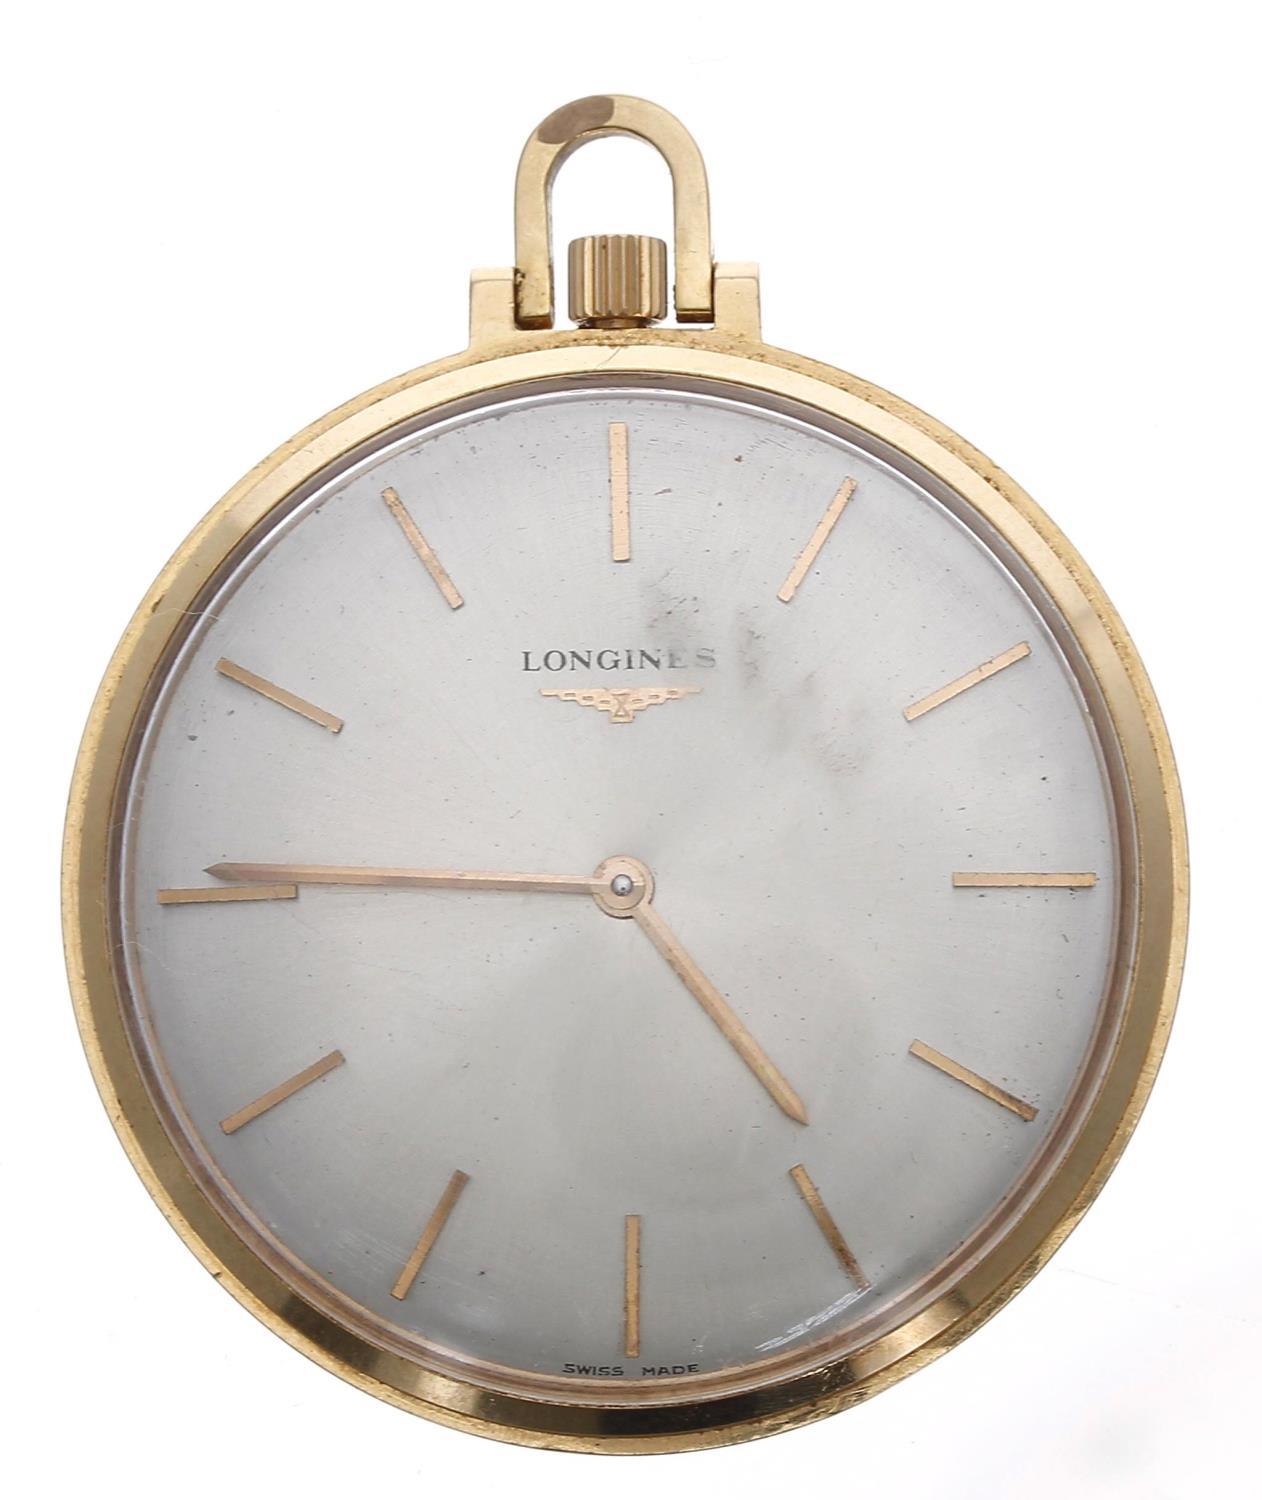 Longines - 18ct dress pocket watch, serial no. 13802652, circa 1966, signed cal. 428 17 jewel